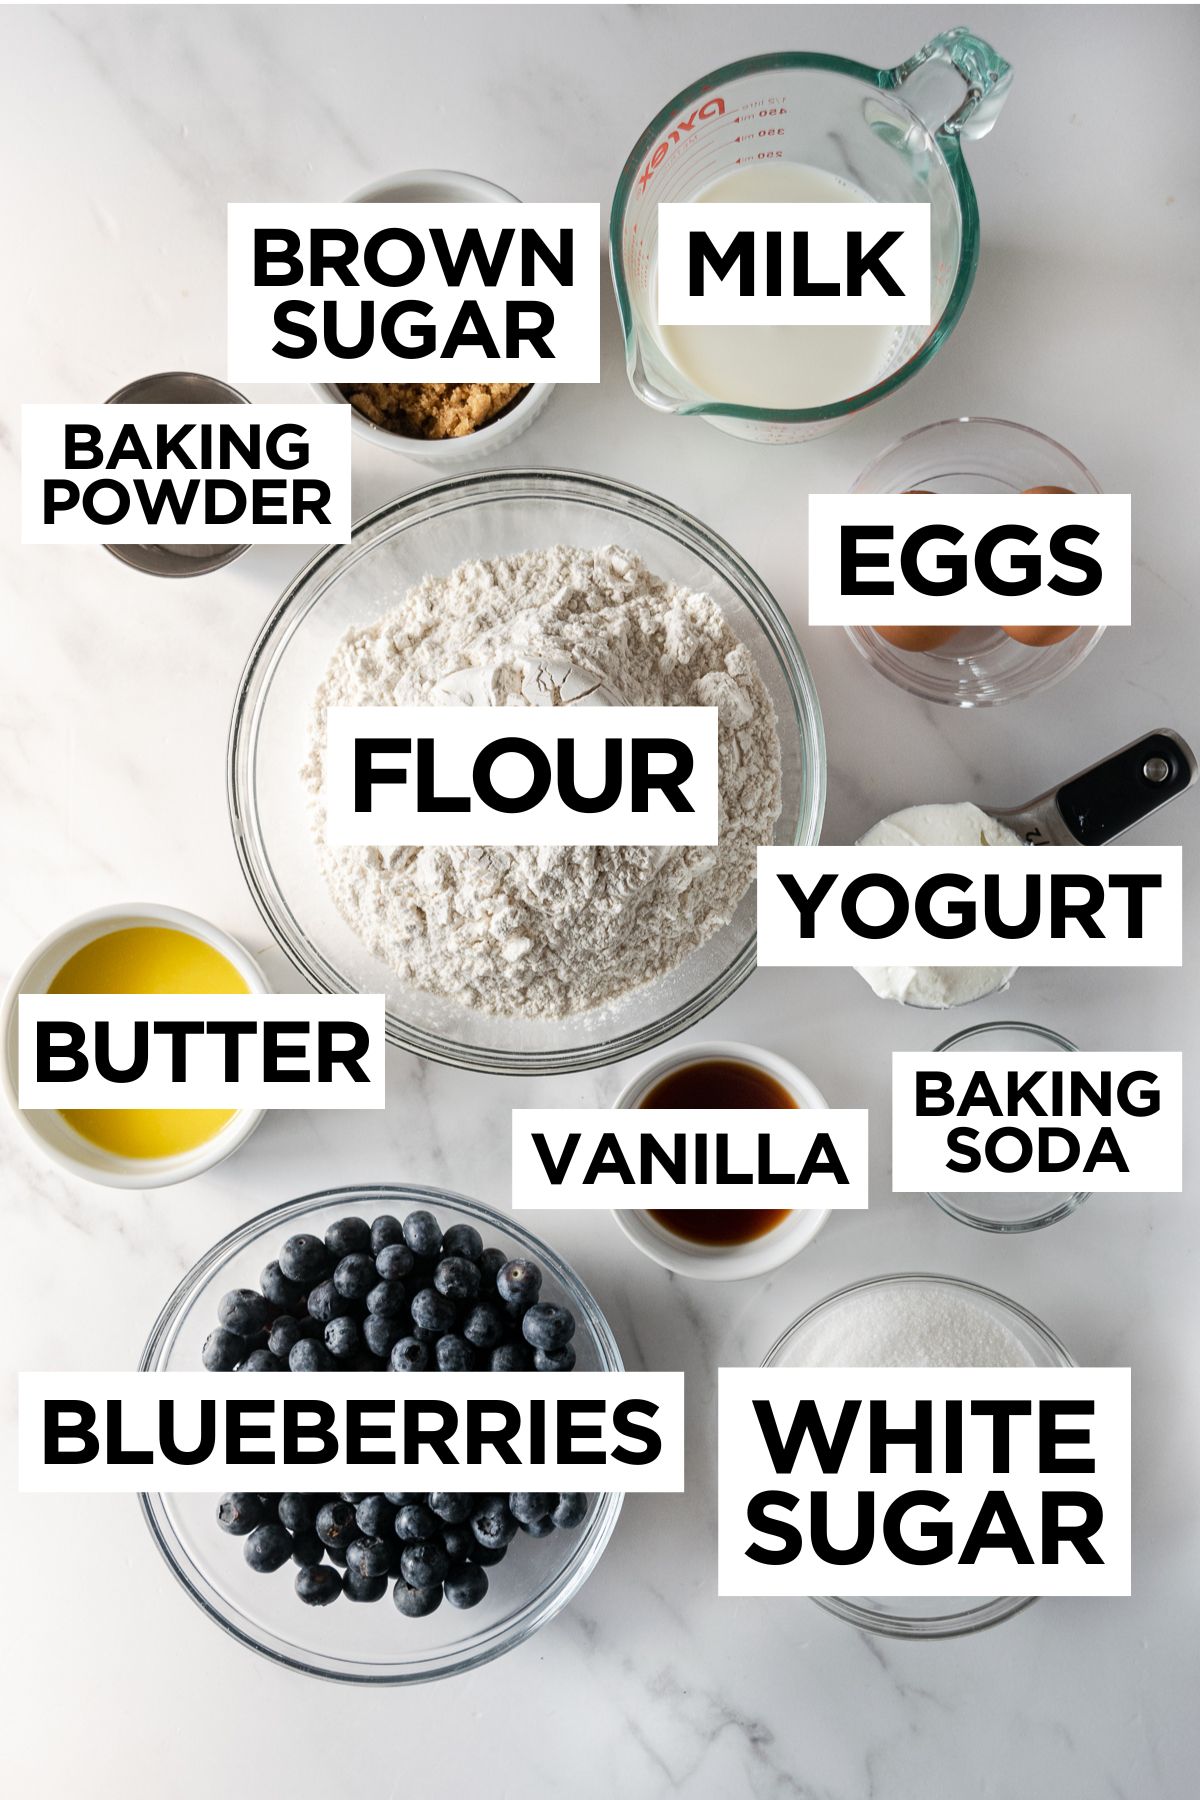 ingredients in bowls for blueberry muffins such as flour, butter, milk, yogurt, etc.